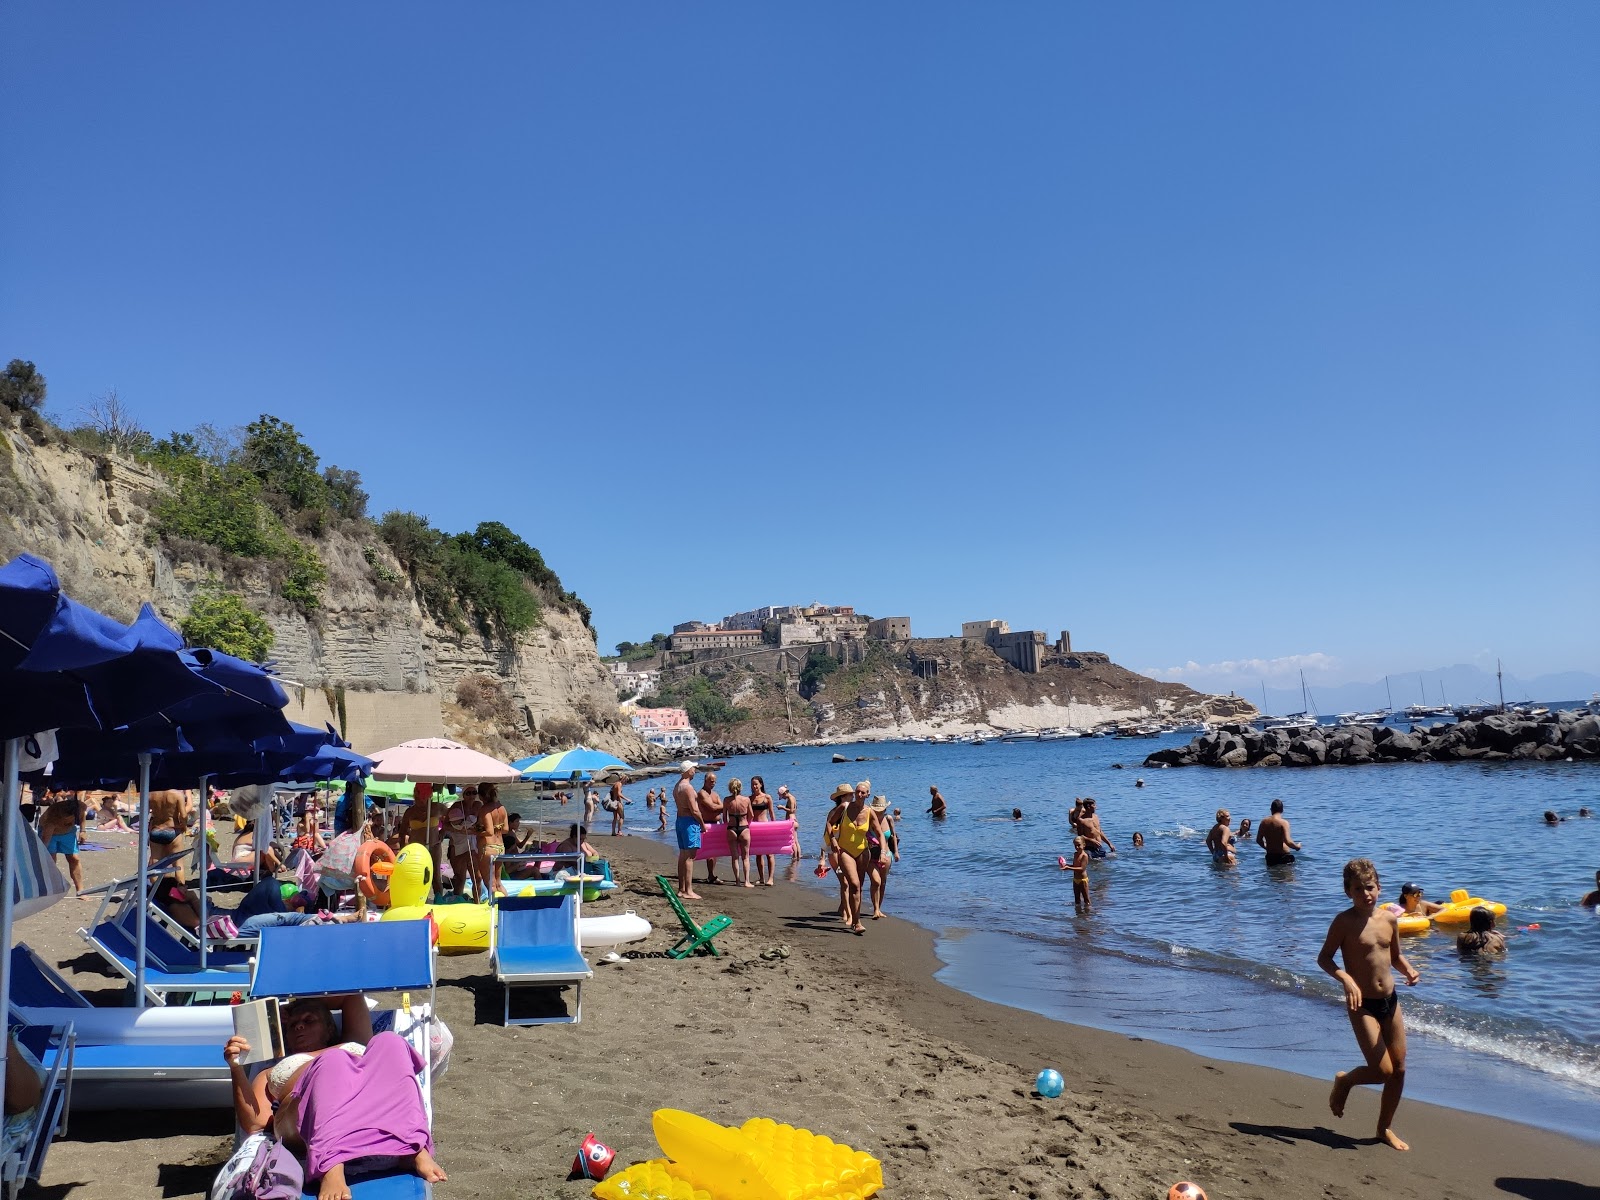 Spiaggia Chiaia'in fotoğrafı geniş plaj ile birlikte